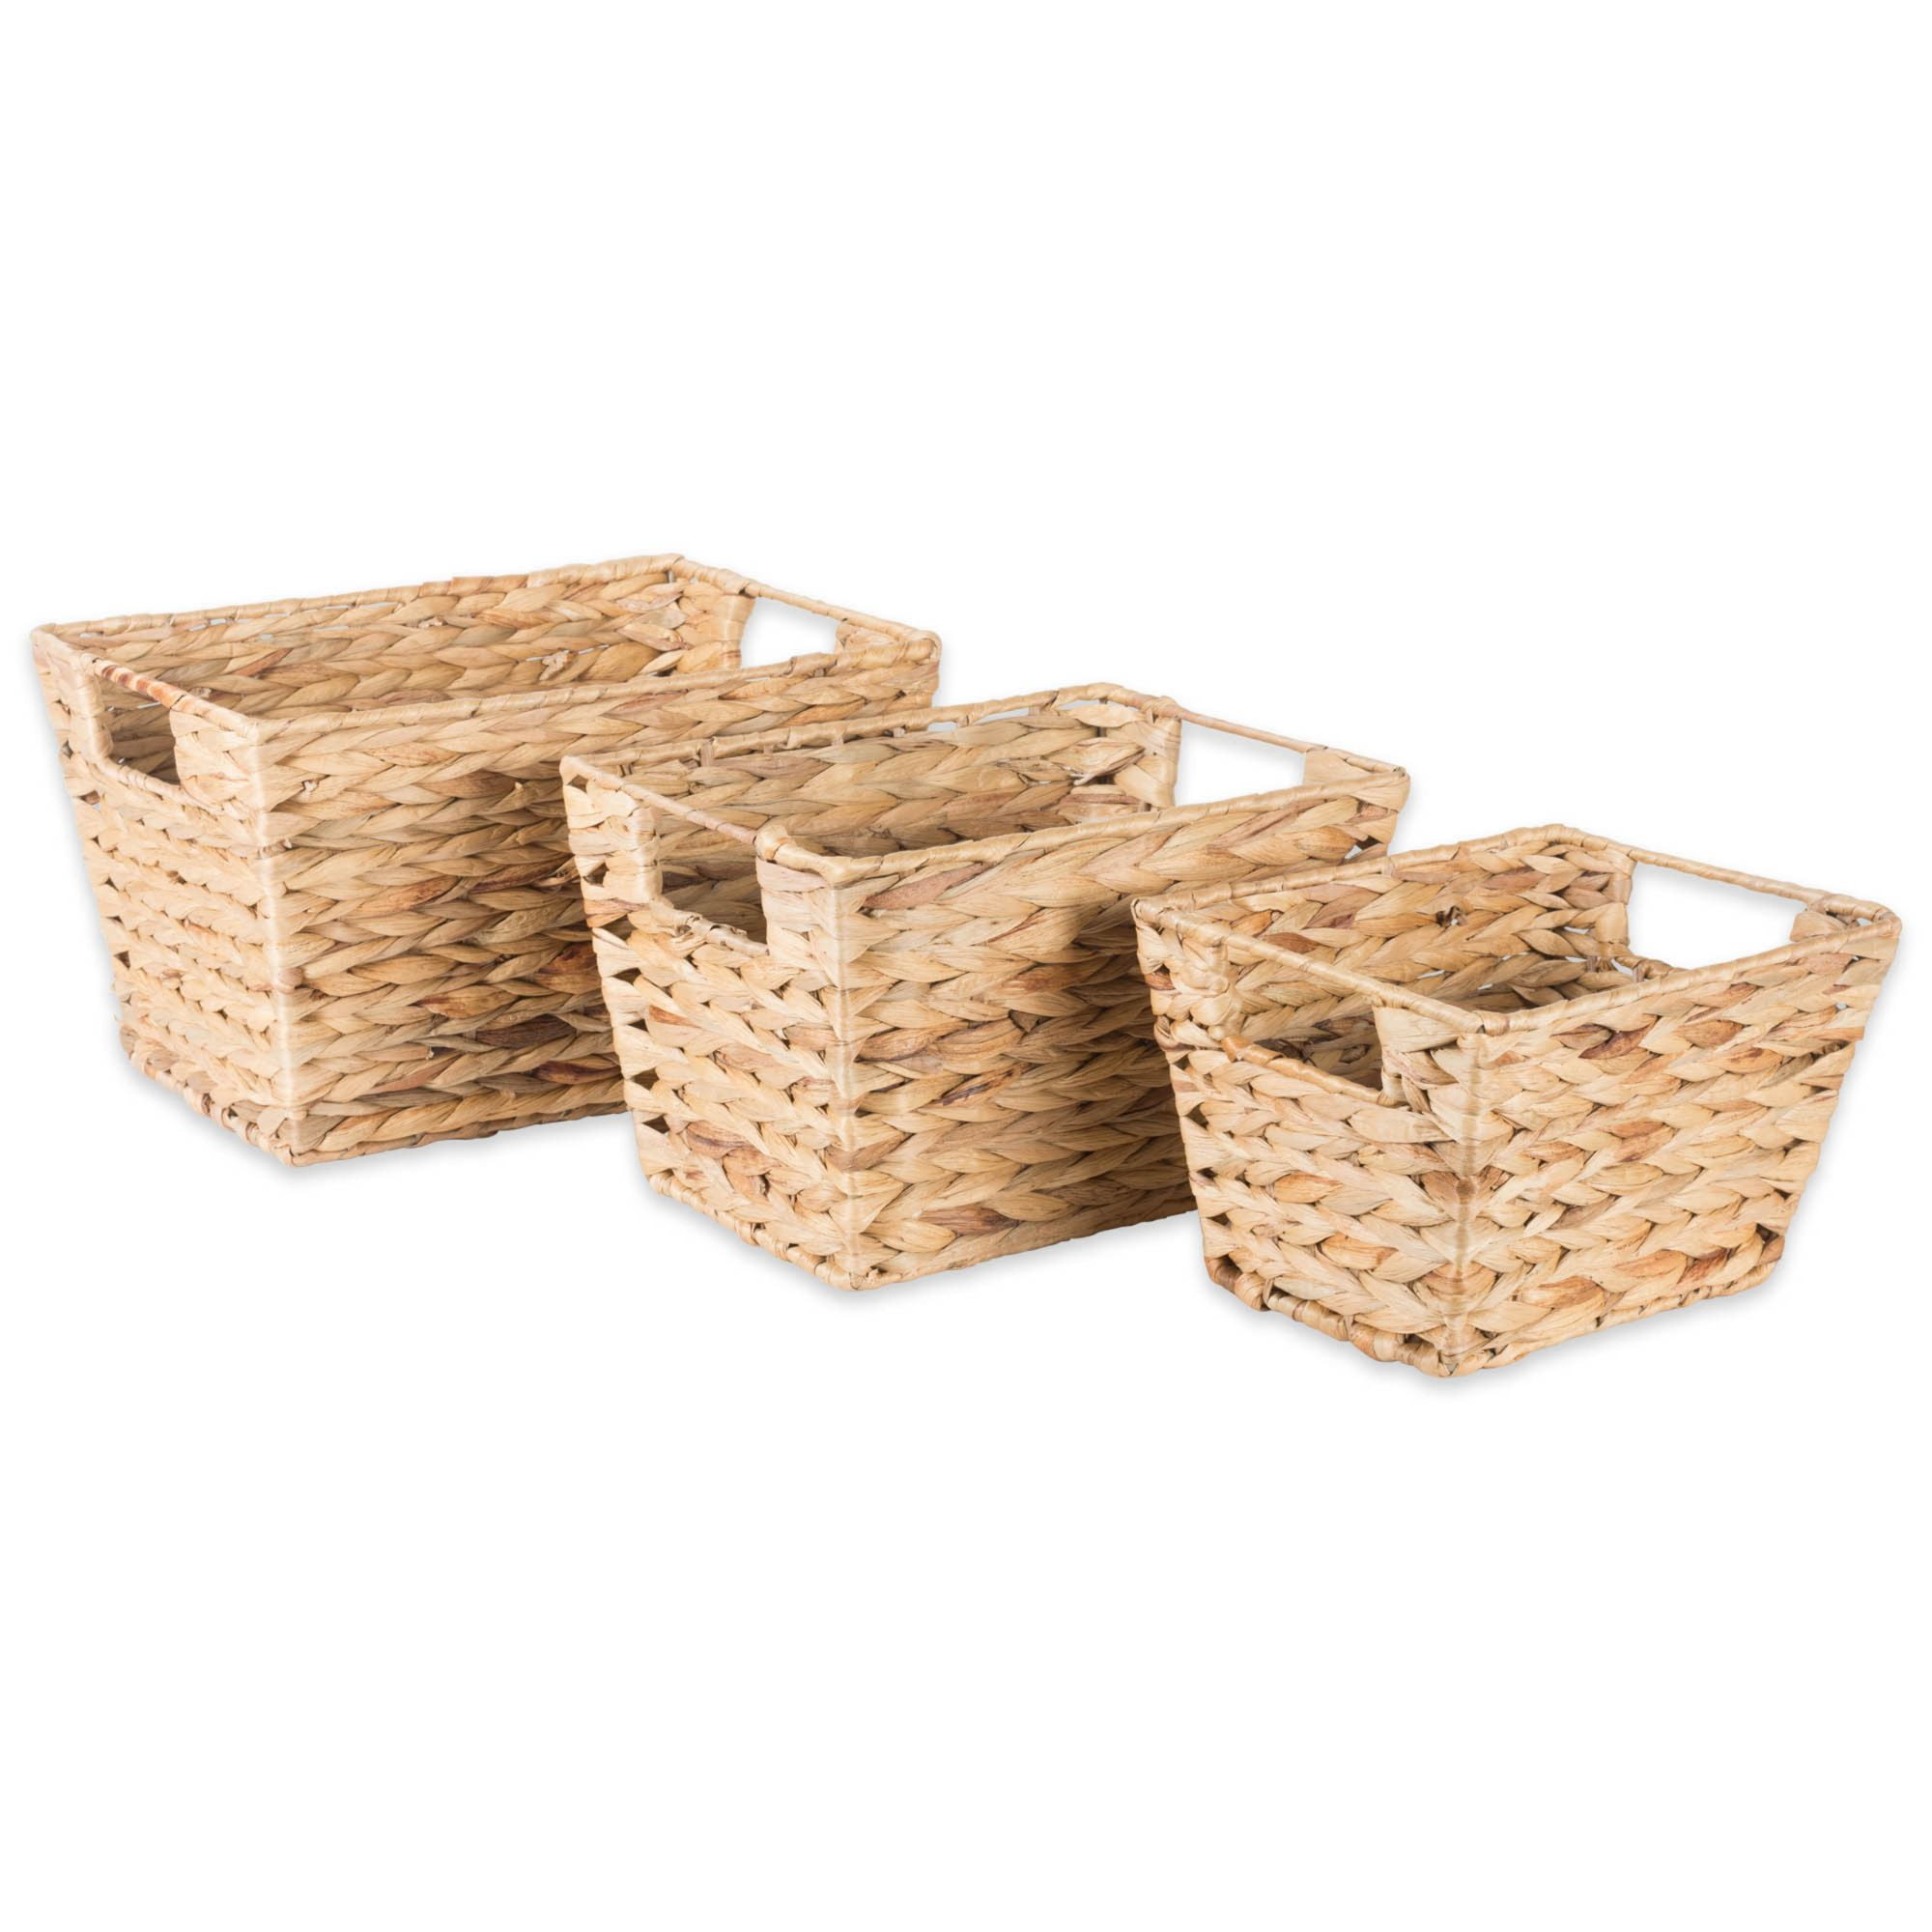 2pcs Hand-Woven Wicker Storage Baskets 12.75"x7.5"x6" Rectangular Natural Brown 